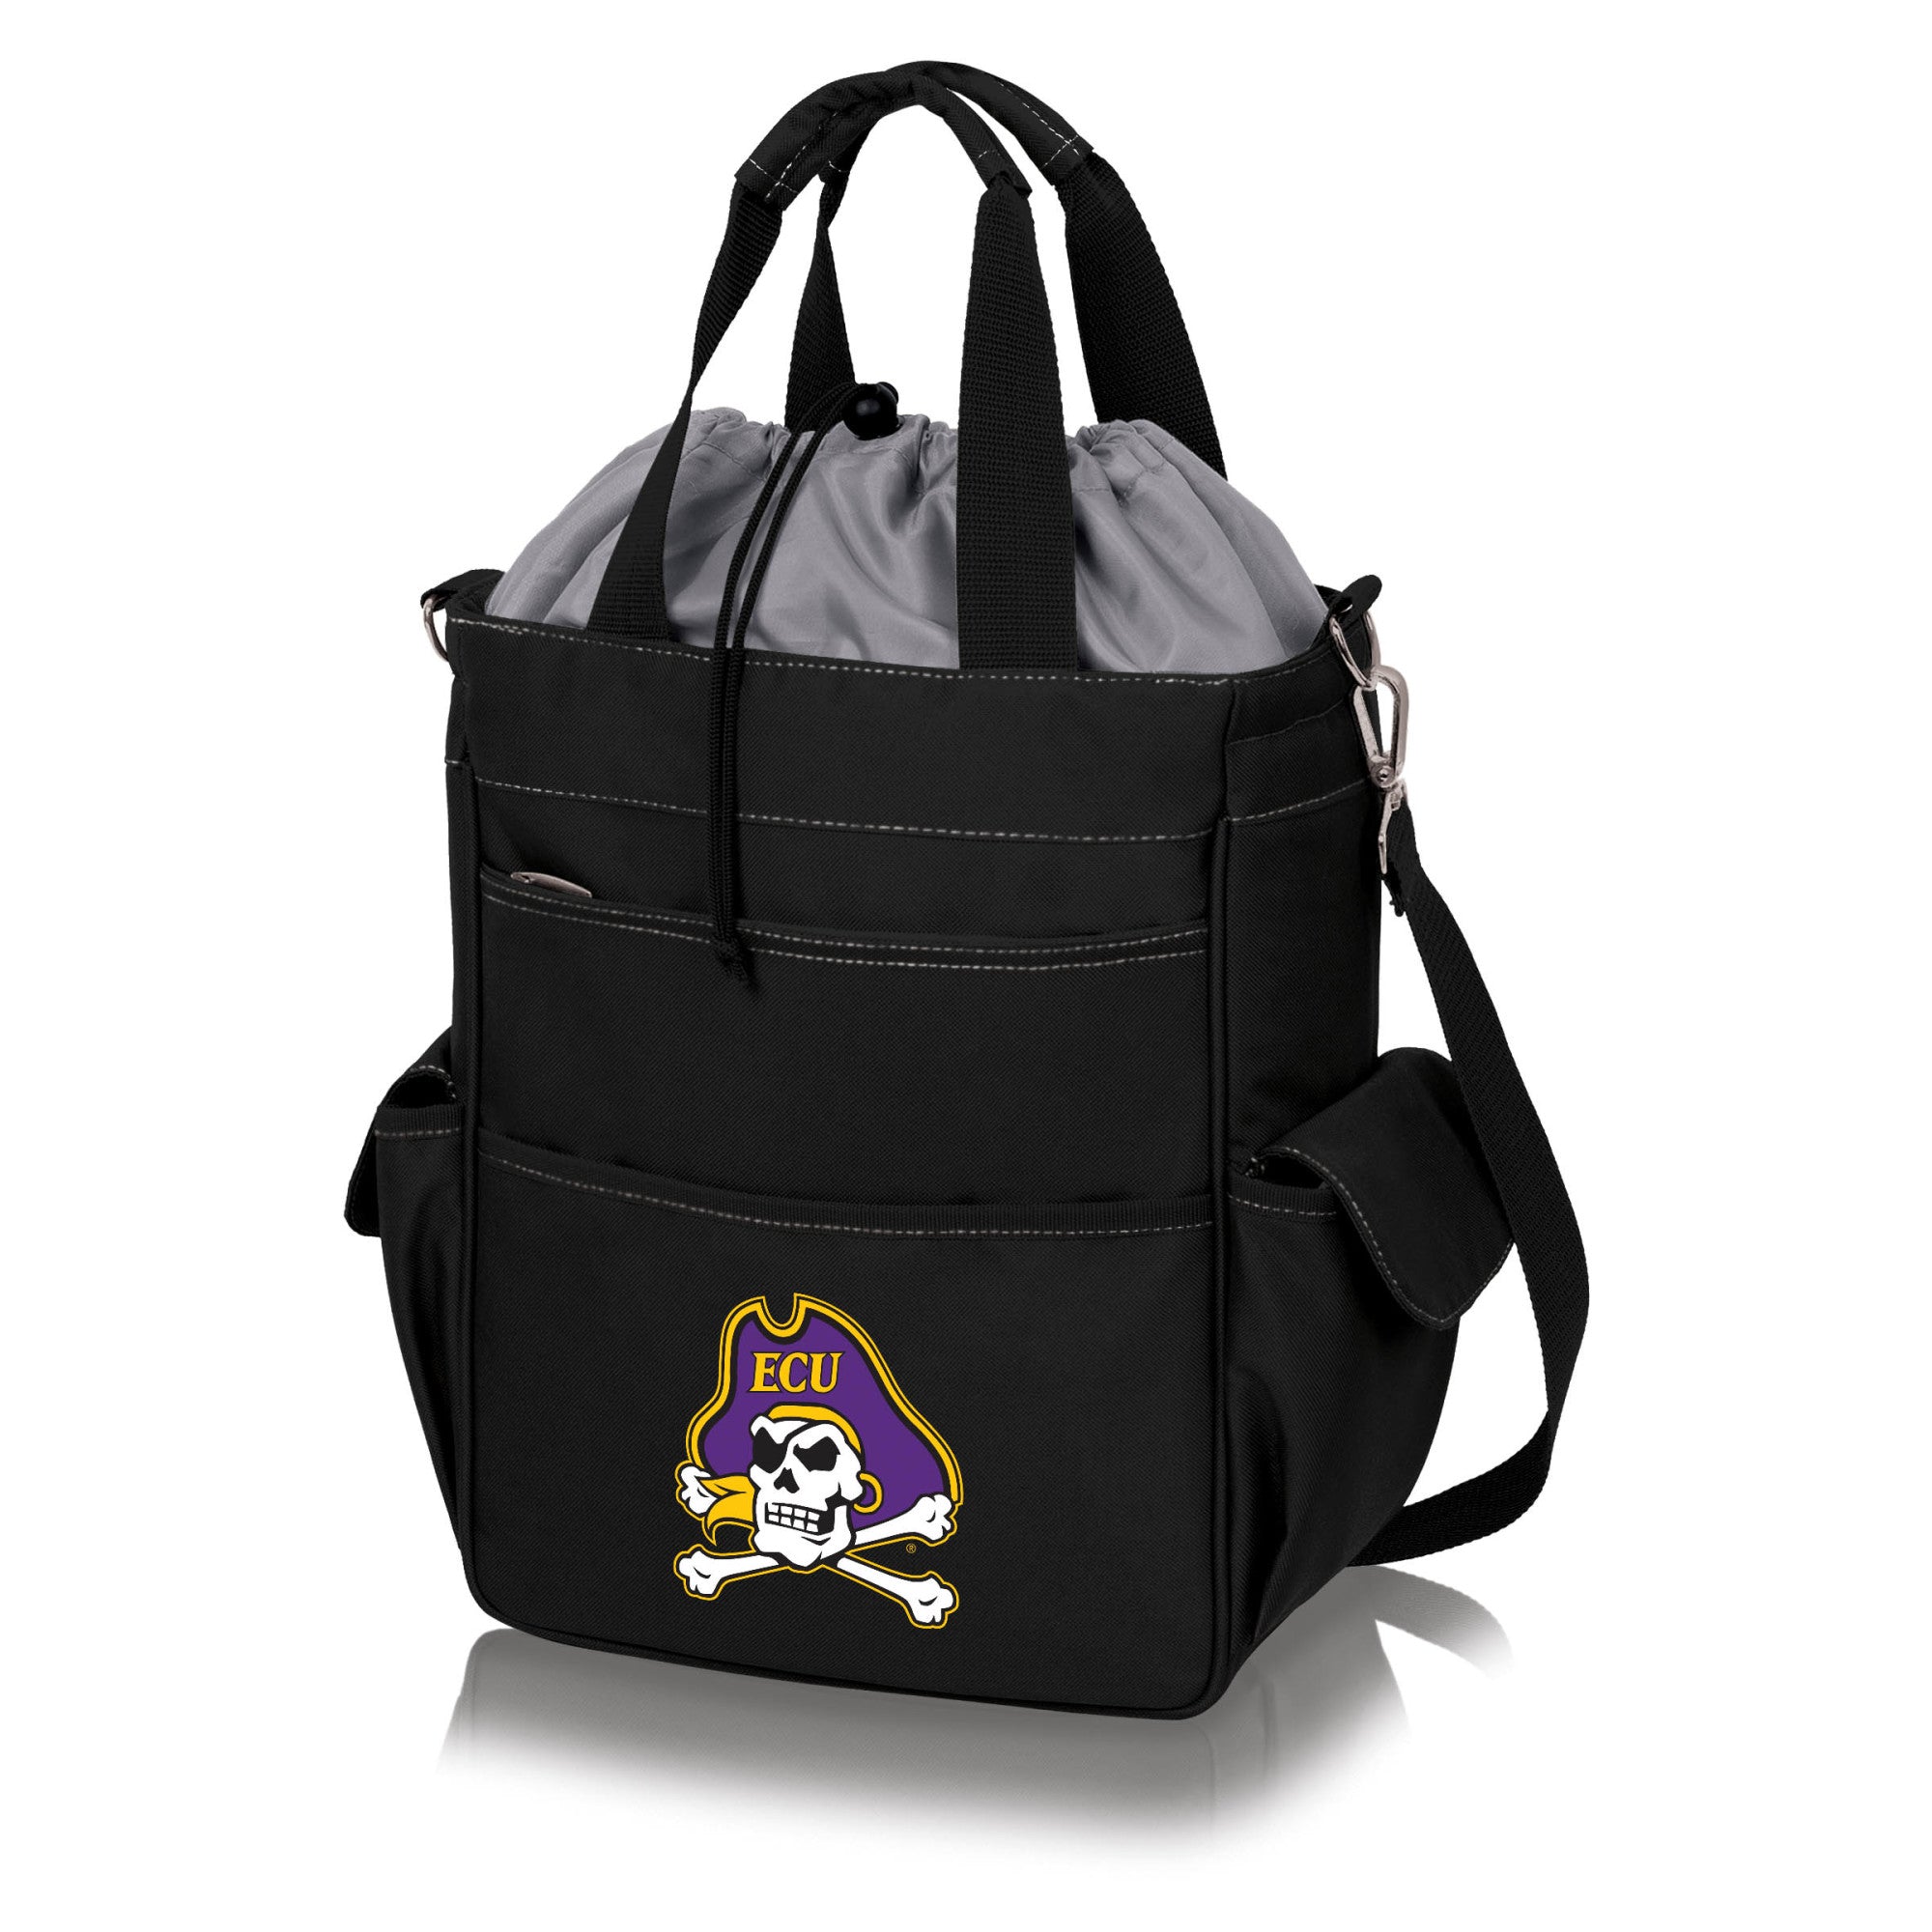 East Carolina Pirates - Activo Cooler Tote Bag